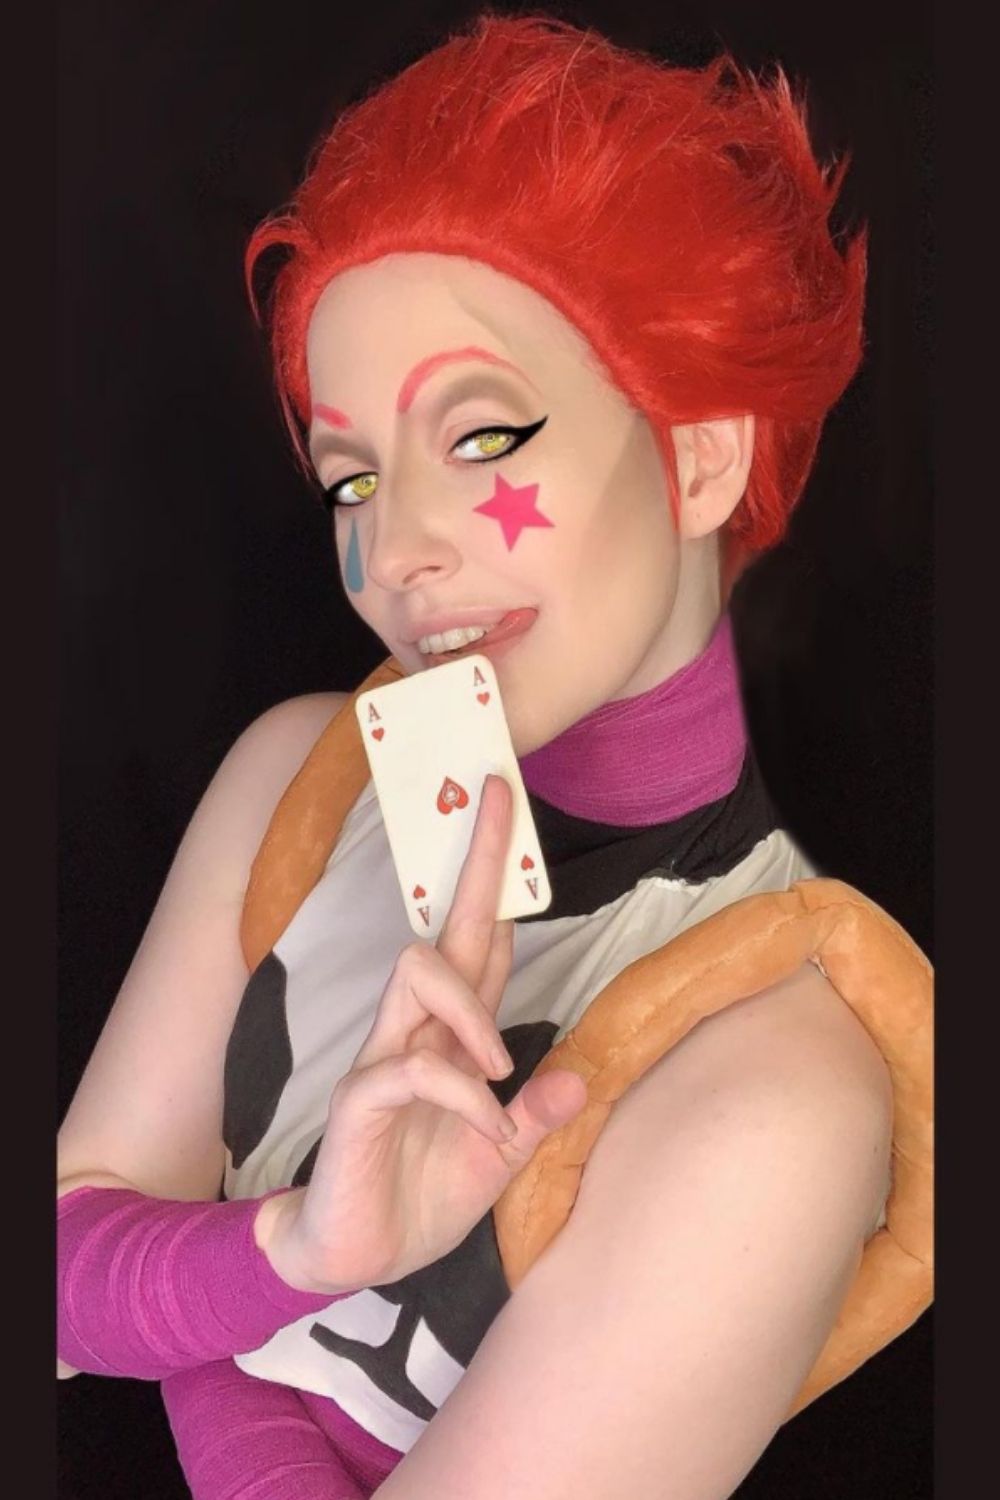 Neon clown makeup